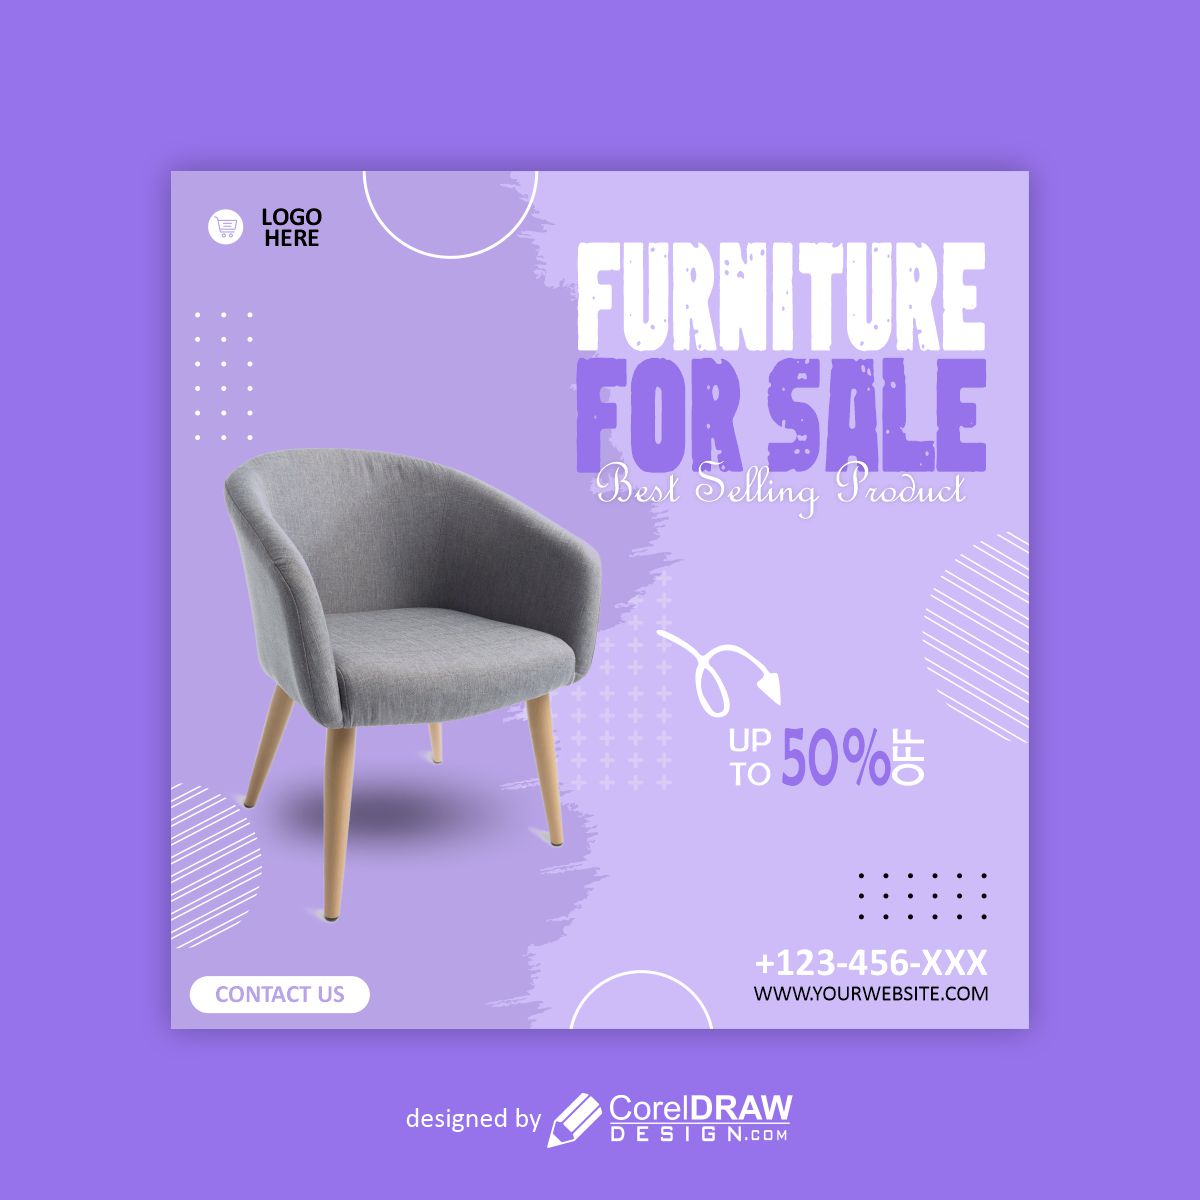 Furniture for sale poster design vector free image